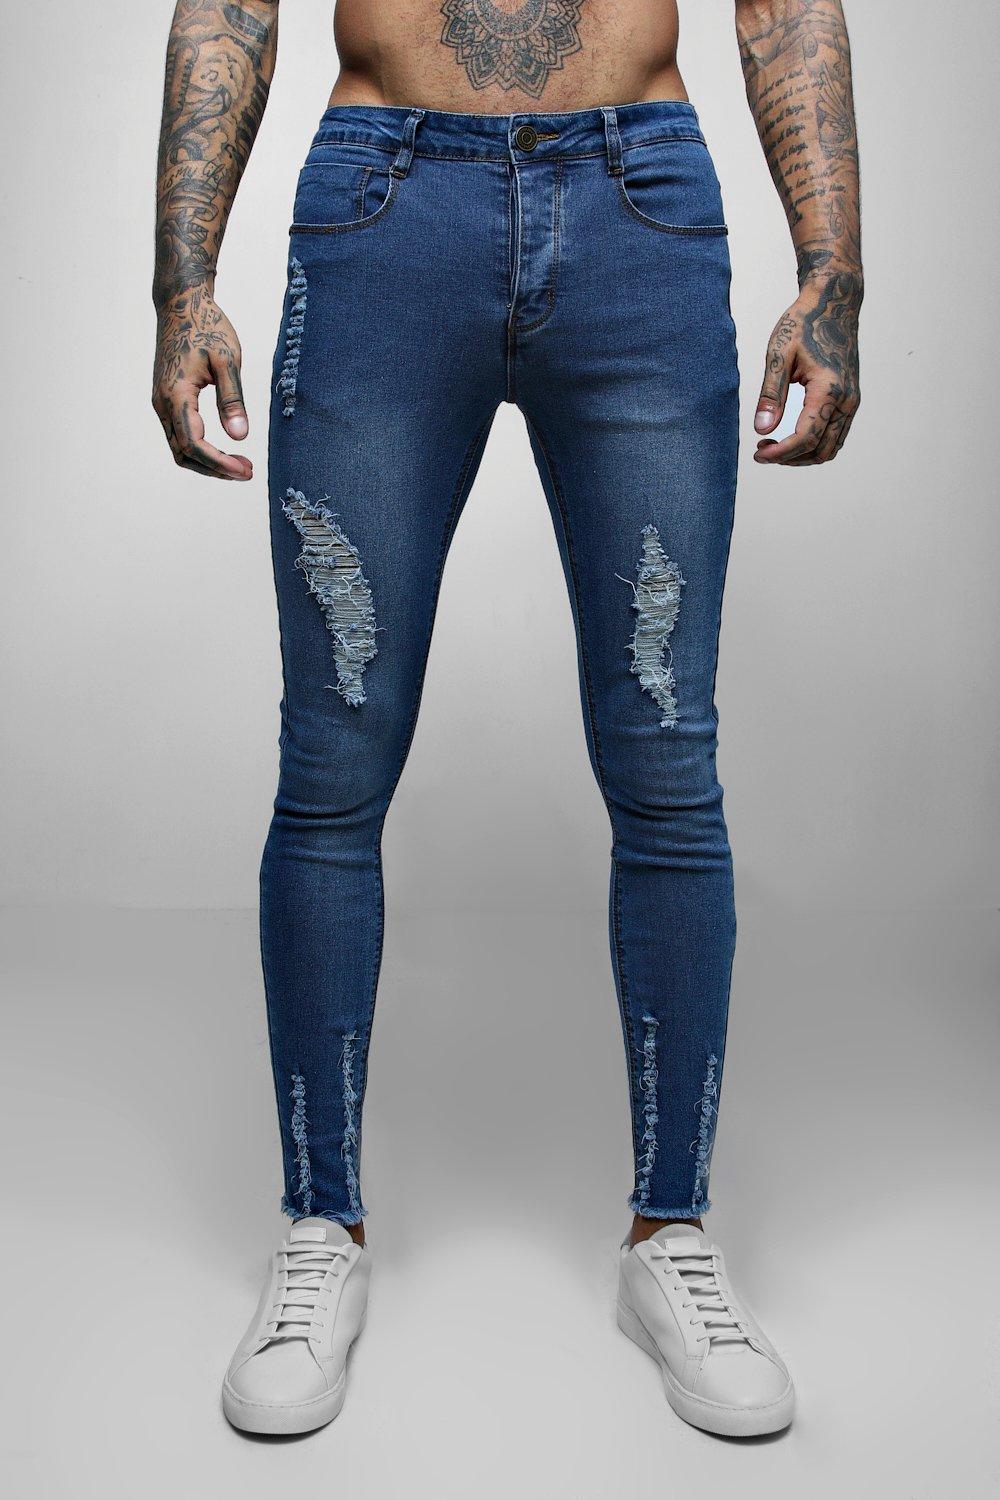 basic blue jeans